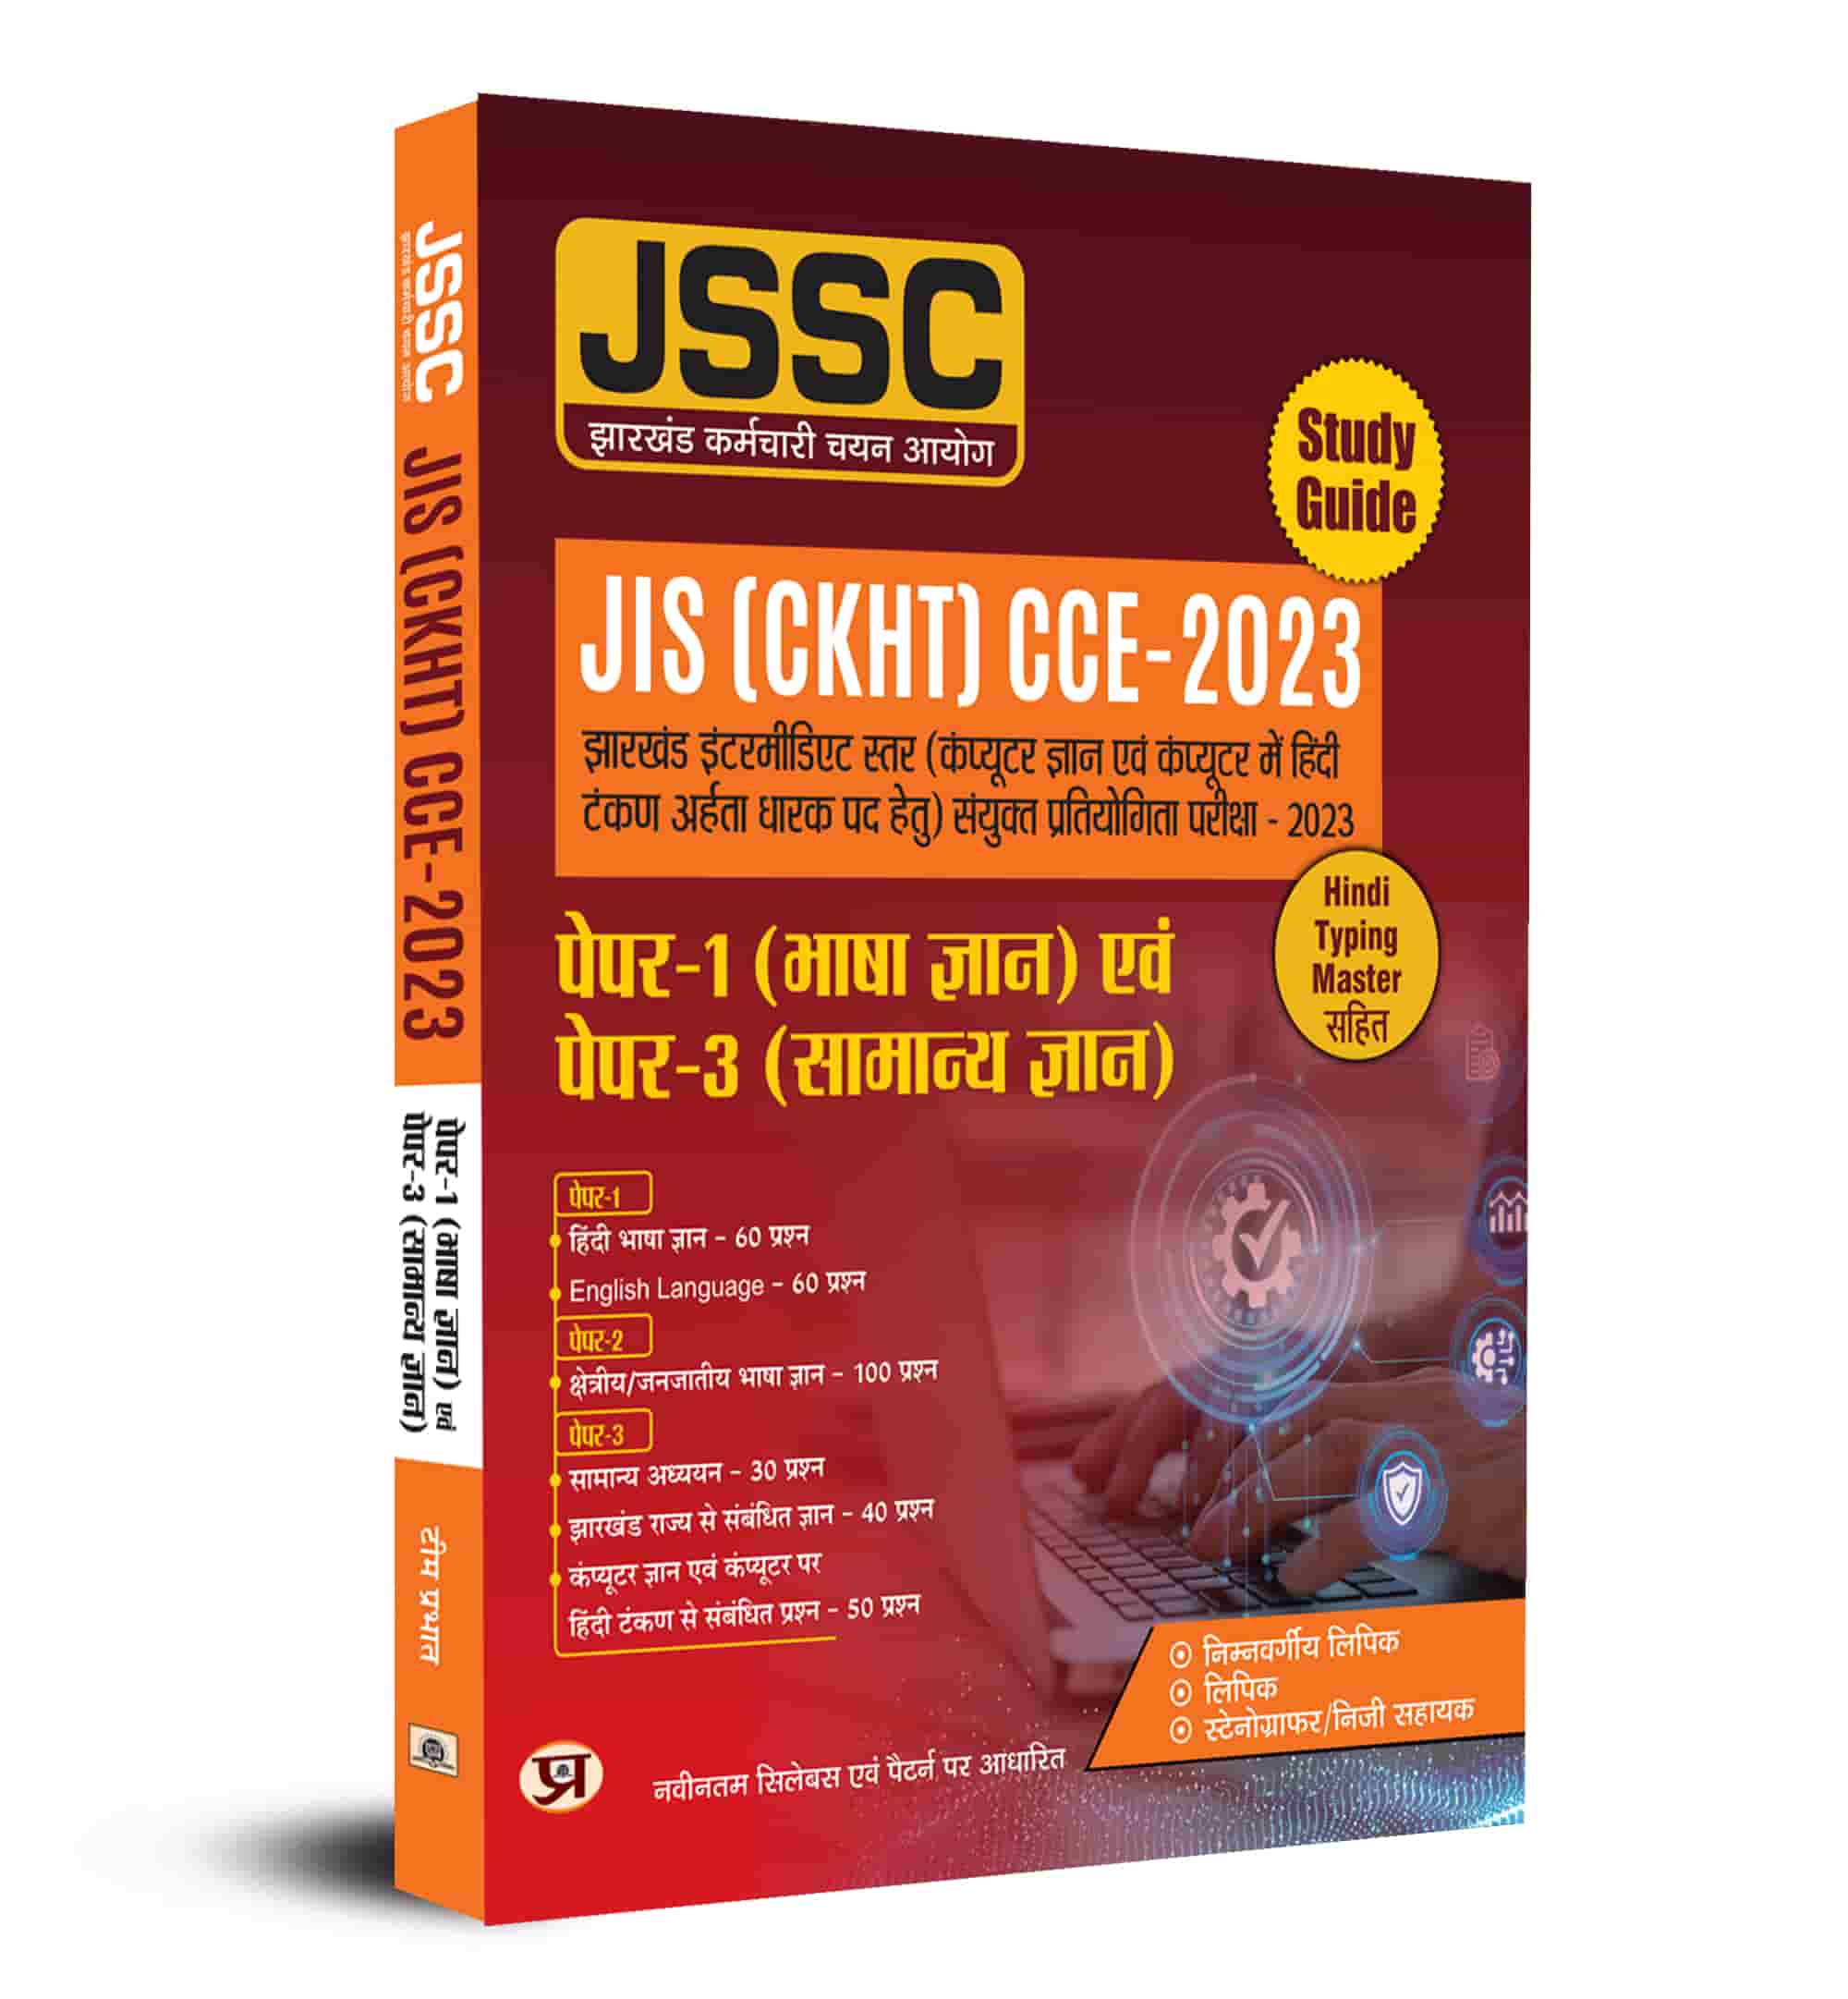 JSSC JIS (CKHT) 2023 for Paper-1 (Language Hindi & English) & Paper-3 General Knowledge Guide (Hindi)